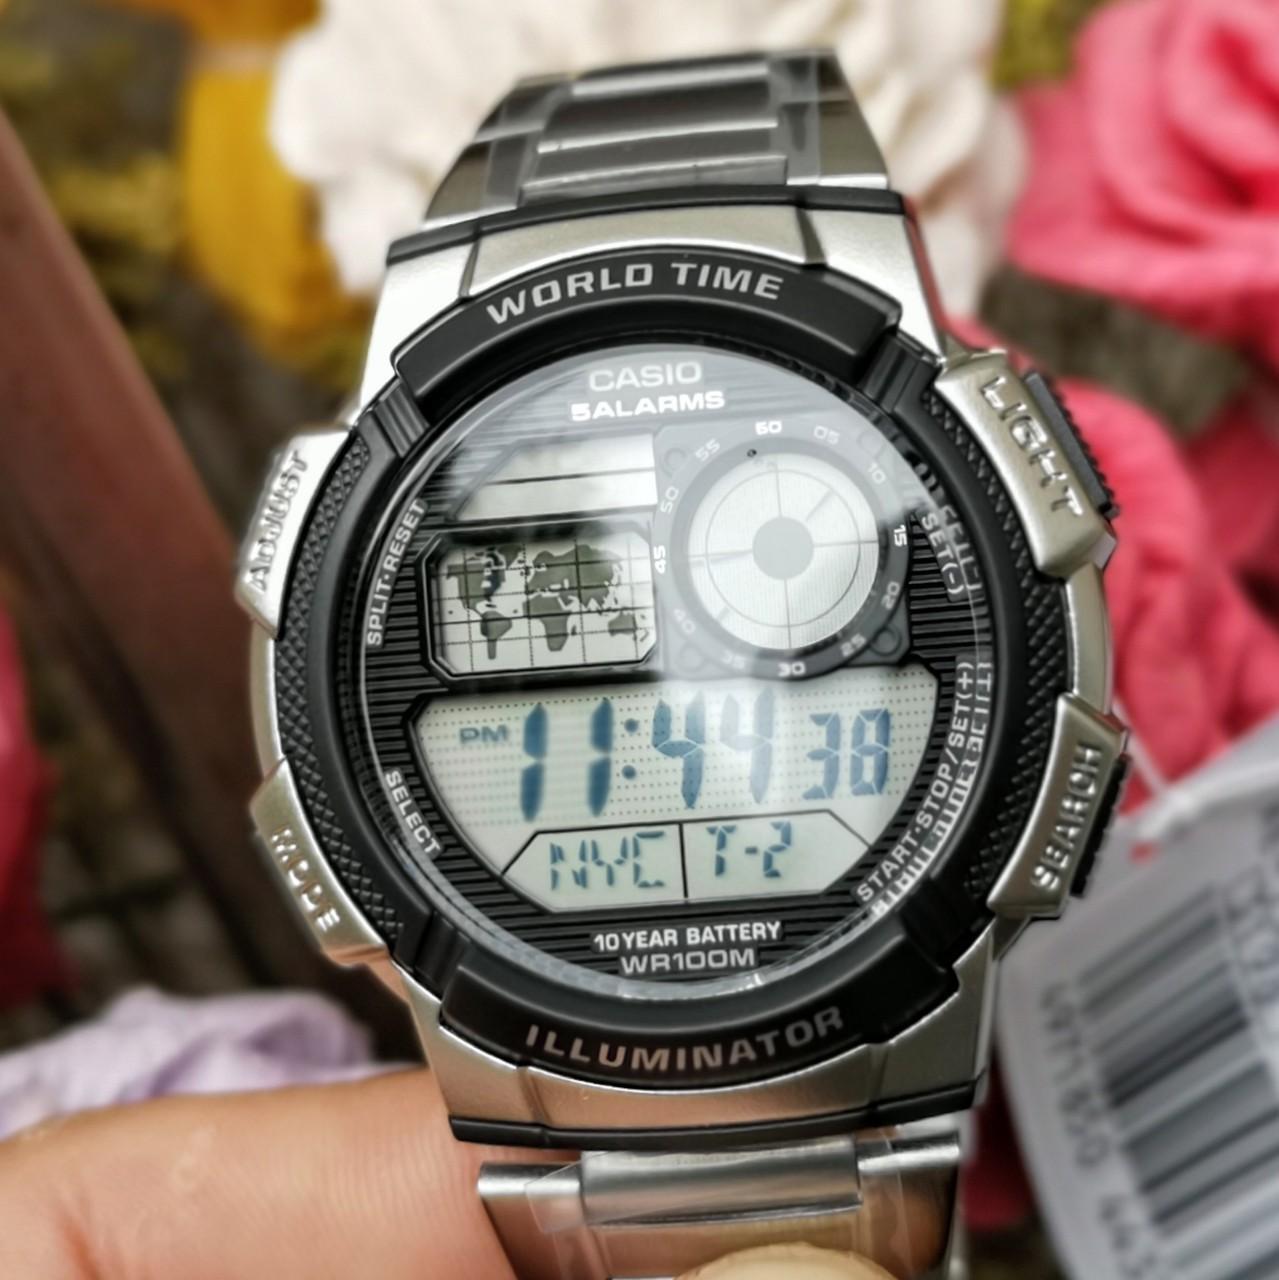 Đồng hồ nữ Casio AE-1000WD - màu 1AV, 1AVEF